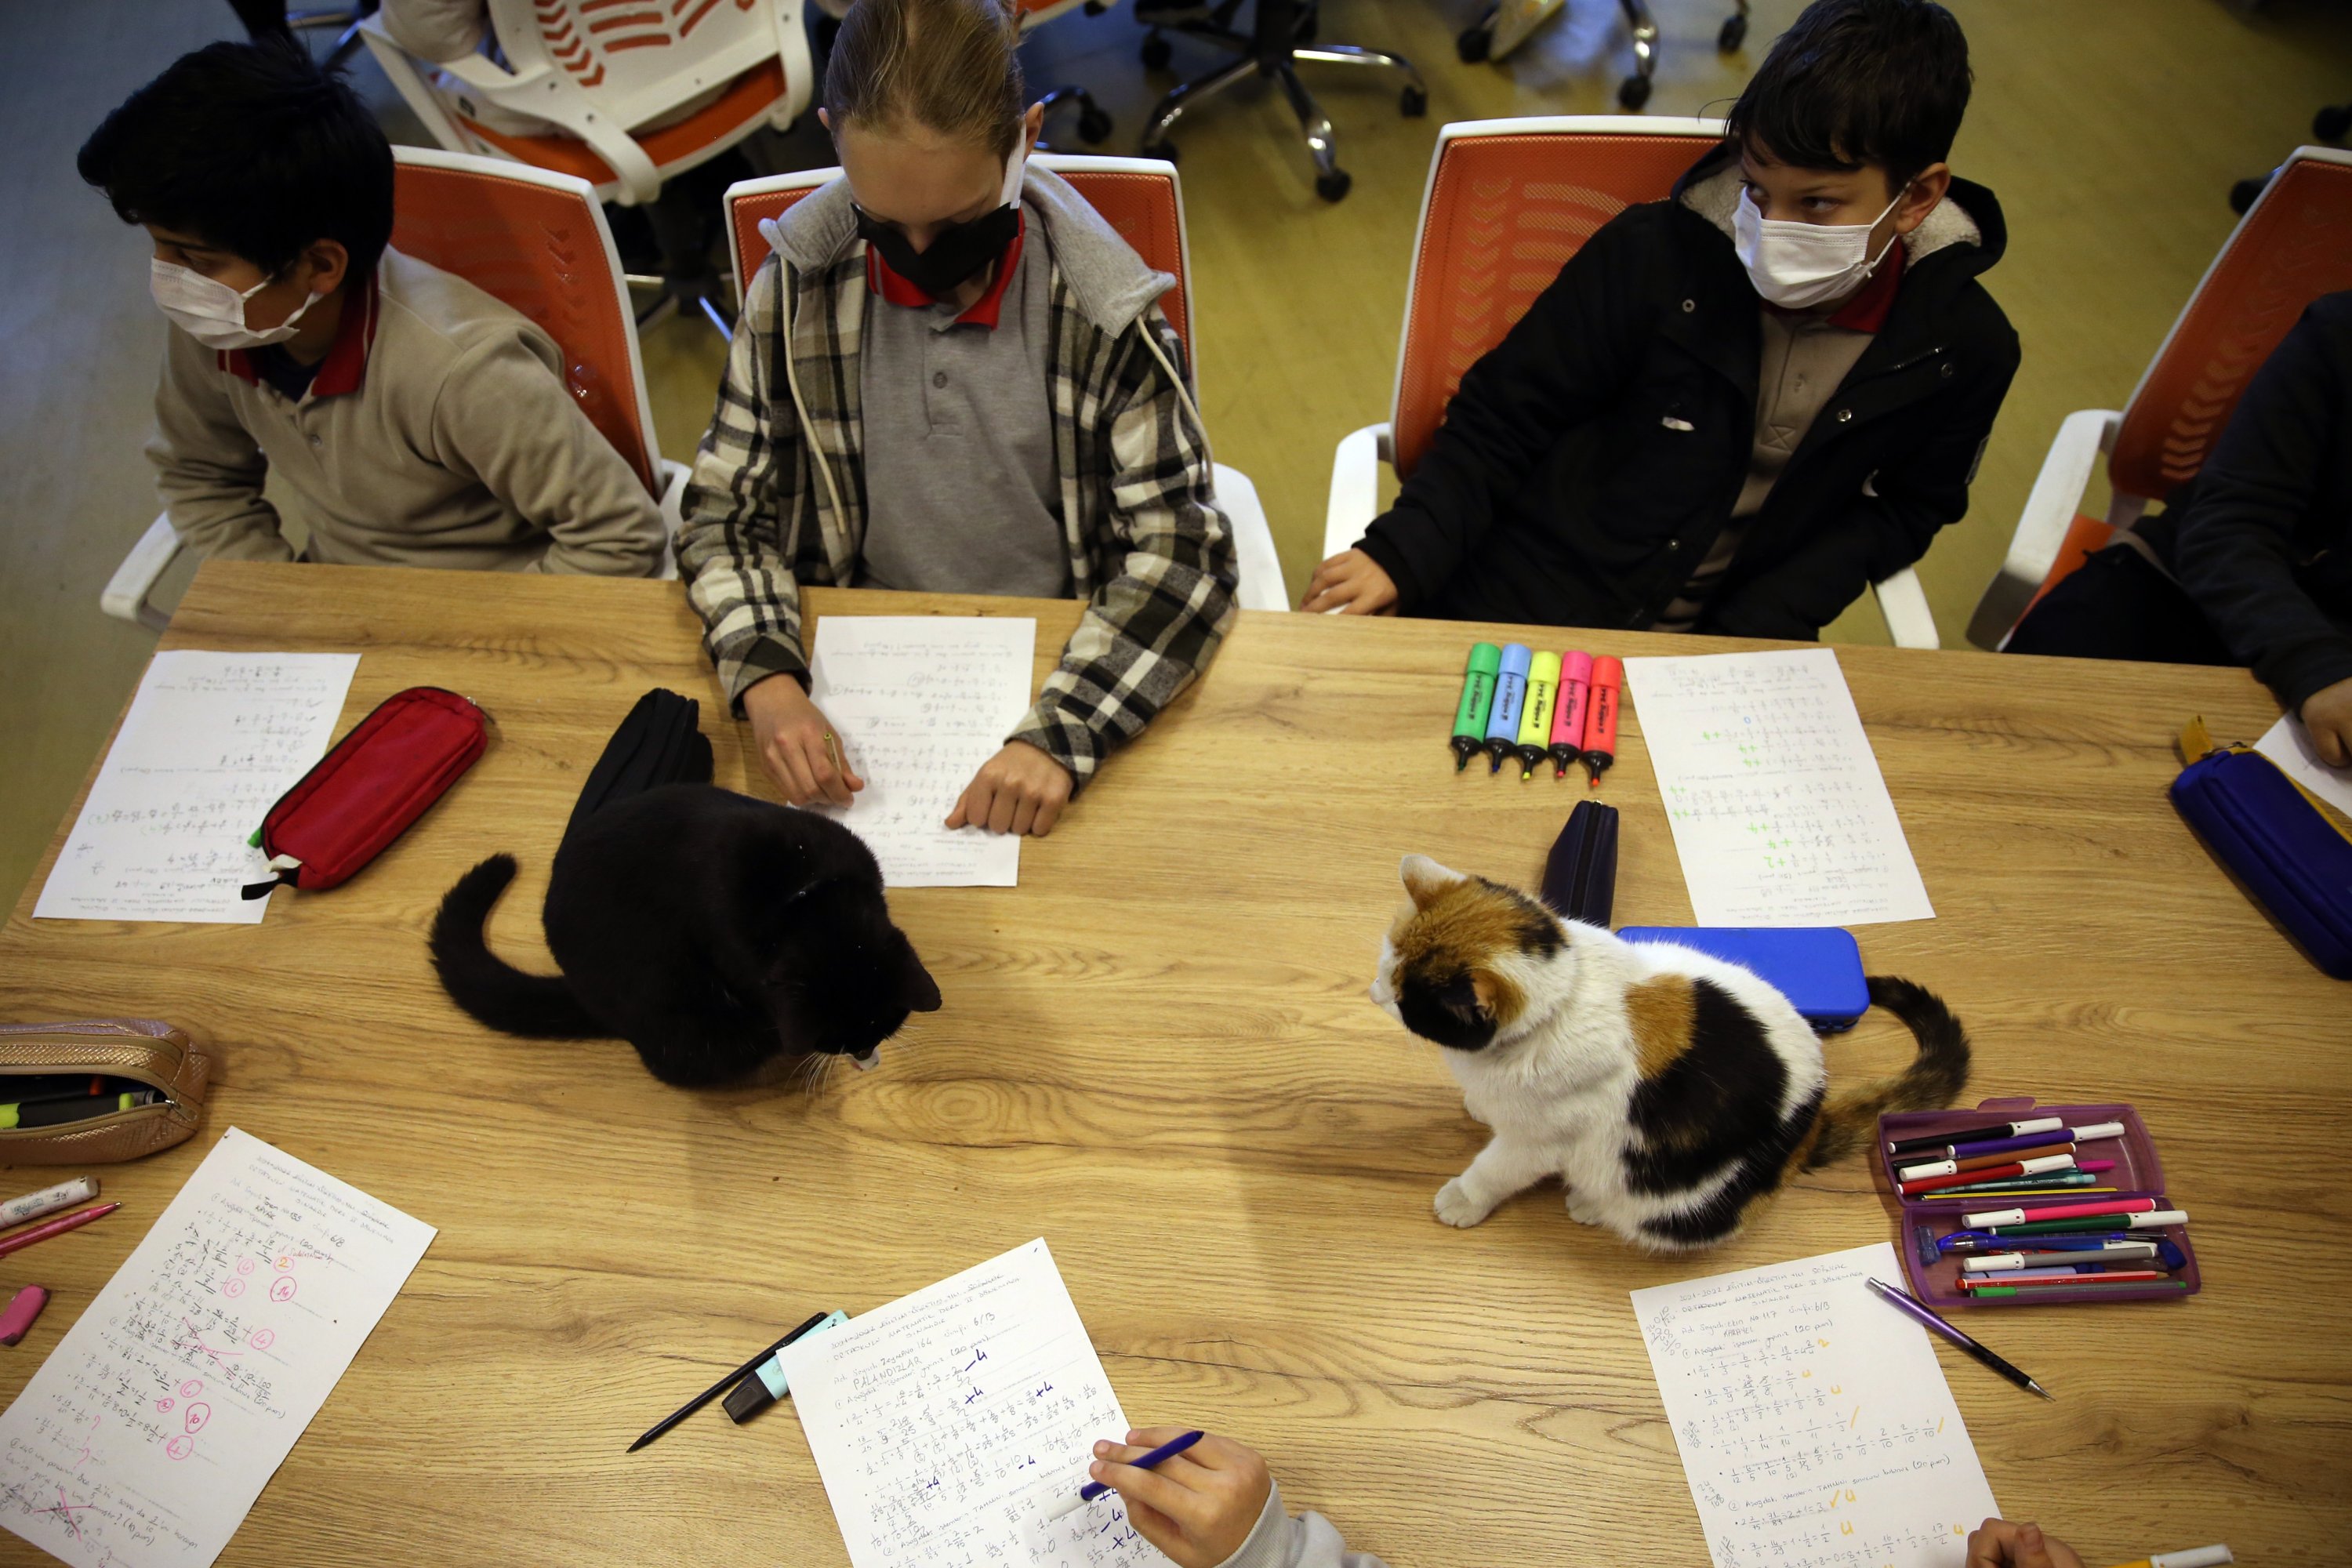 The cats sit on the desk in the classroom, Aydın, western Turkey, Feb. 22, 2022. (AA Photo)